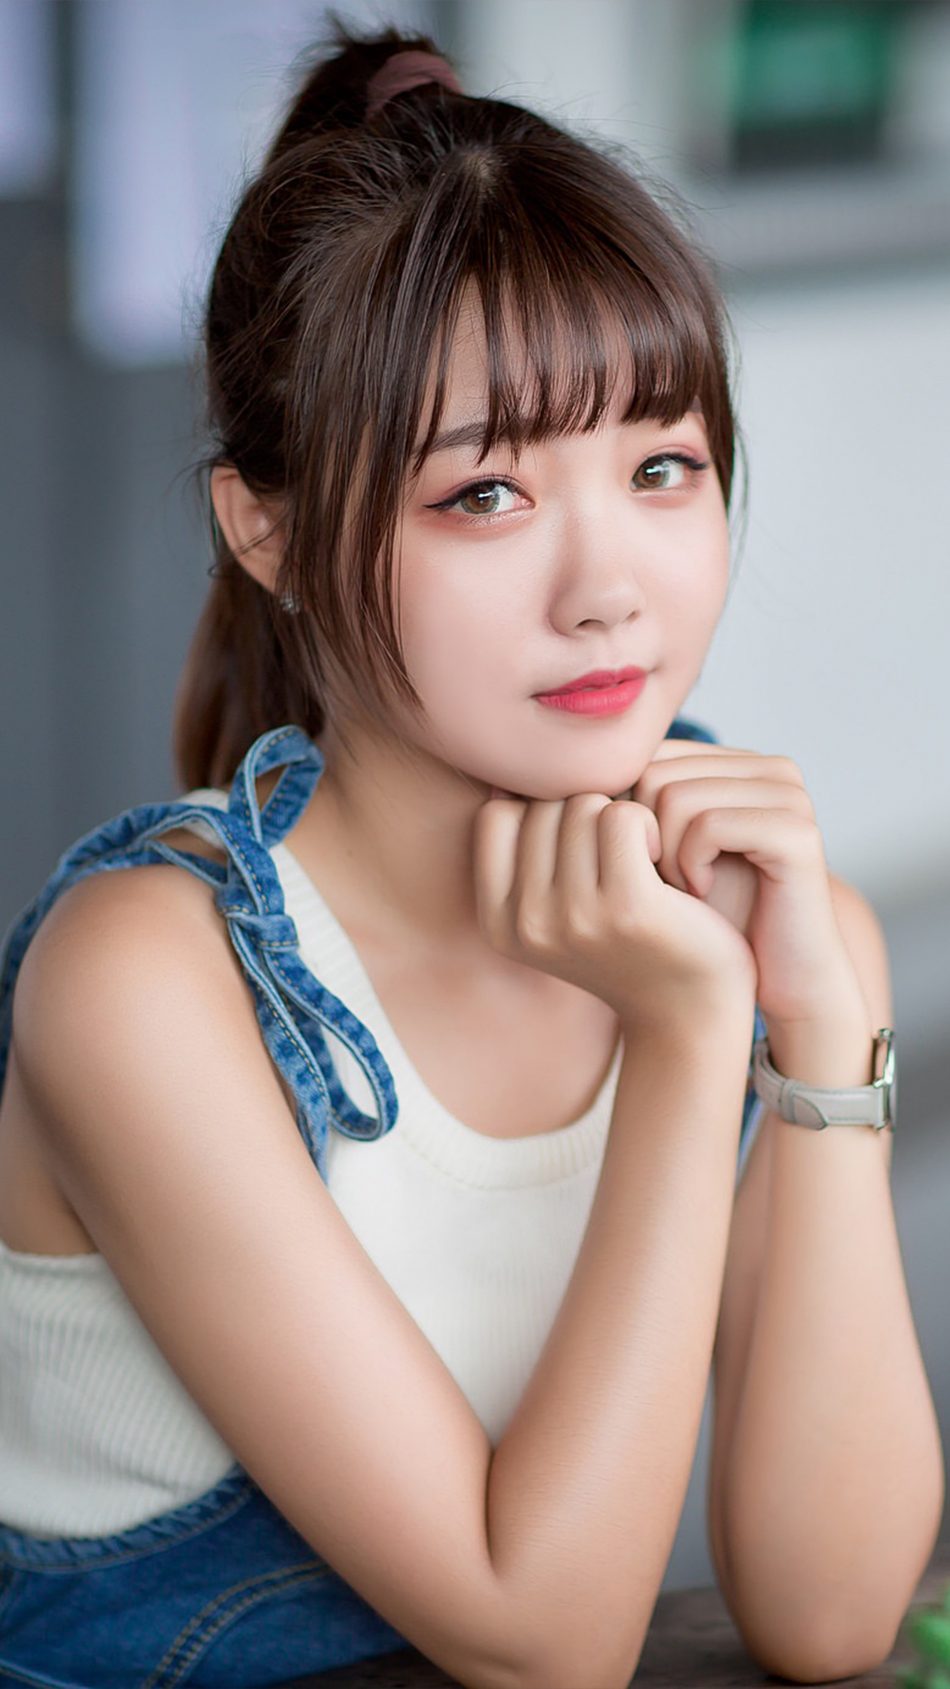 Cute Adorable Asian Girl Photography 4K Ultra HD Mobile Wallpaper